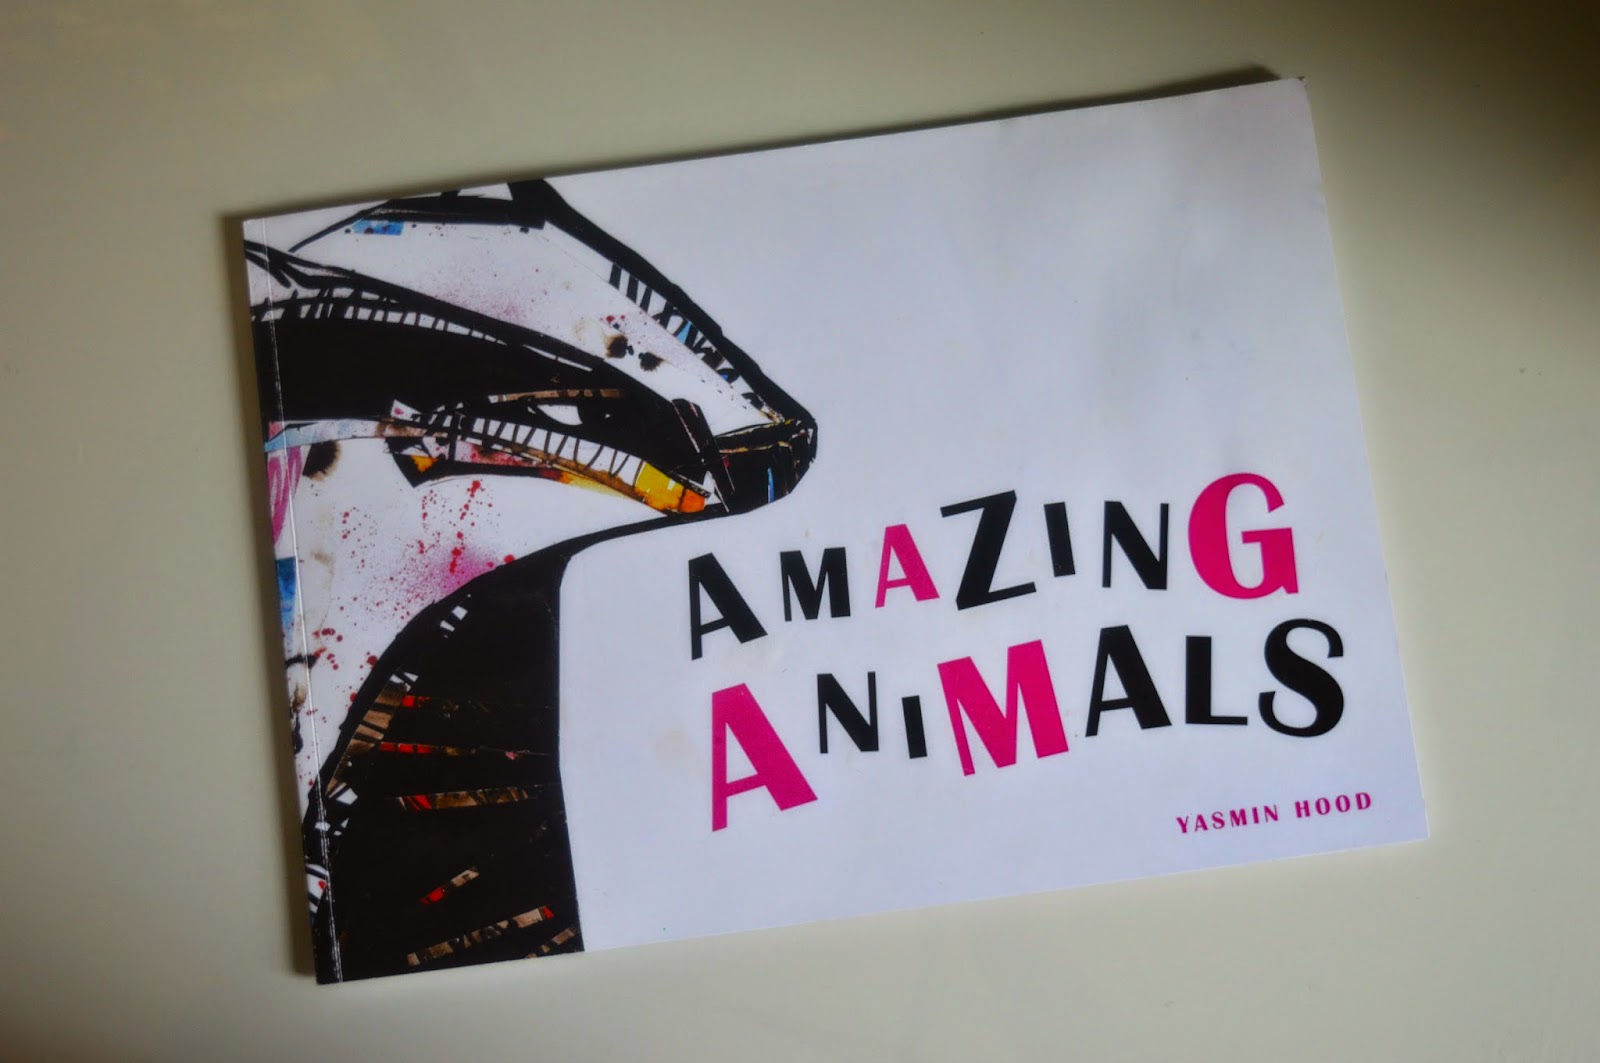 Amazing Animals Yasmin Hood - Mellies Corner